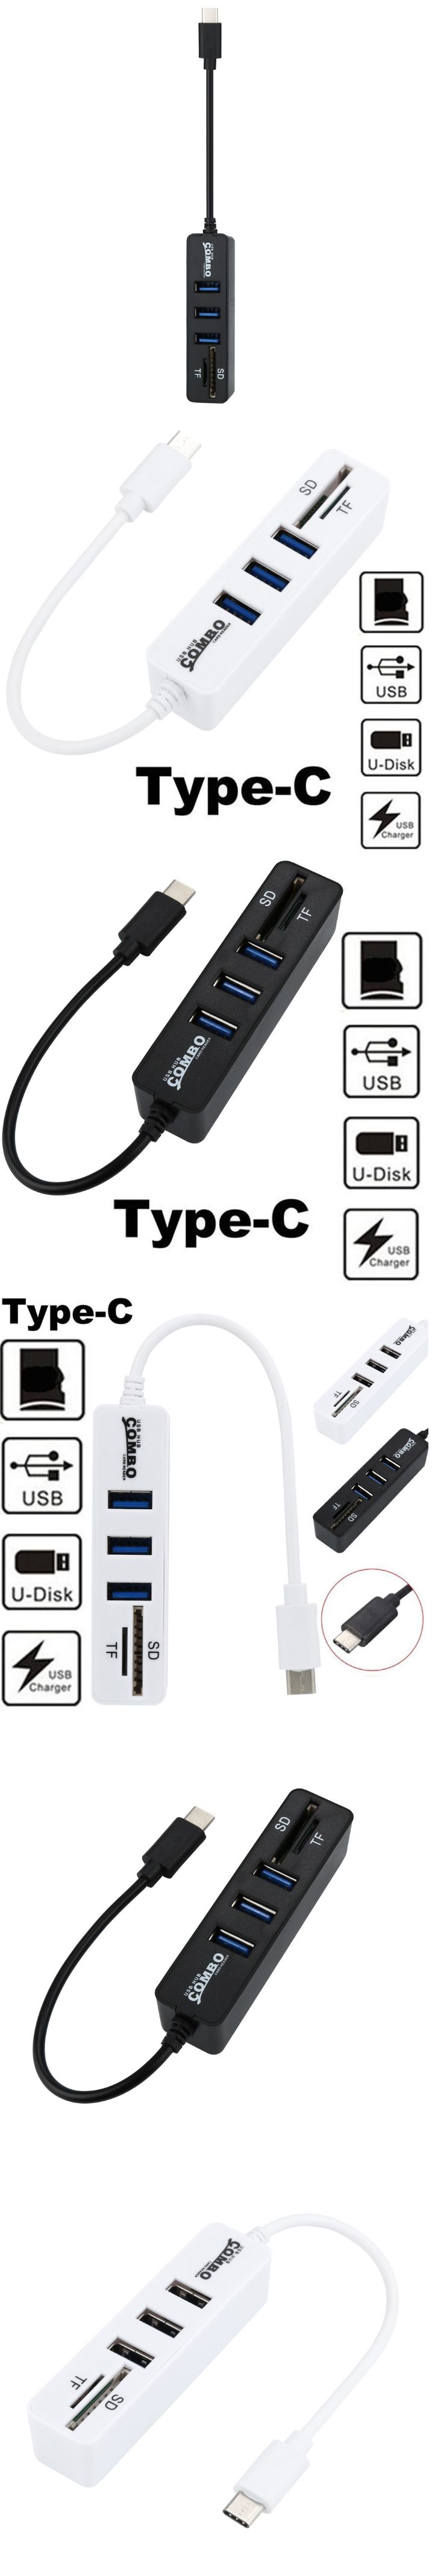 brand factory manufacturer,usb-c hub,usb-c adapter, type-c hub,type-c adapter,usb-c to HDMI,type-c to HDMI,usb-c converter,